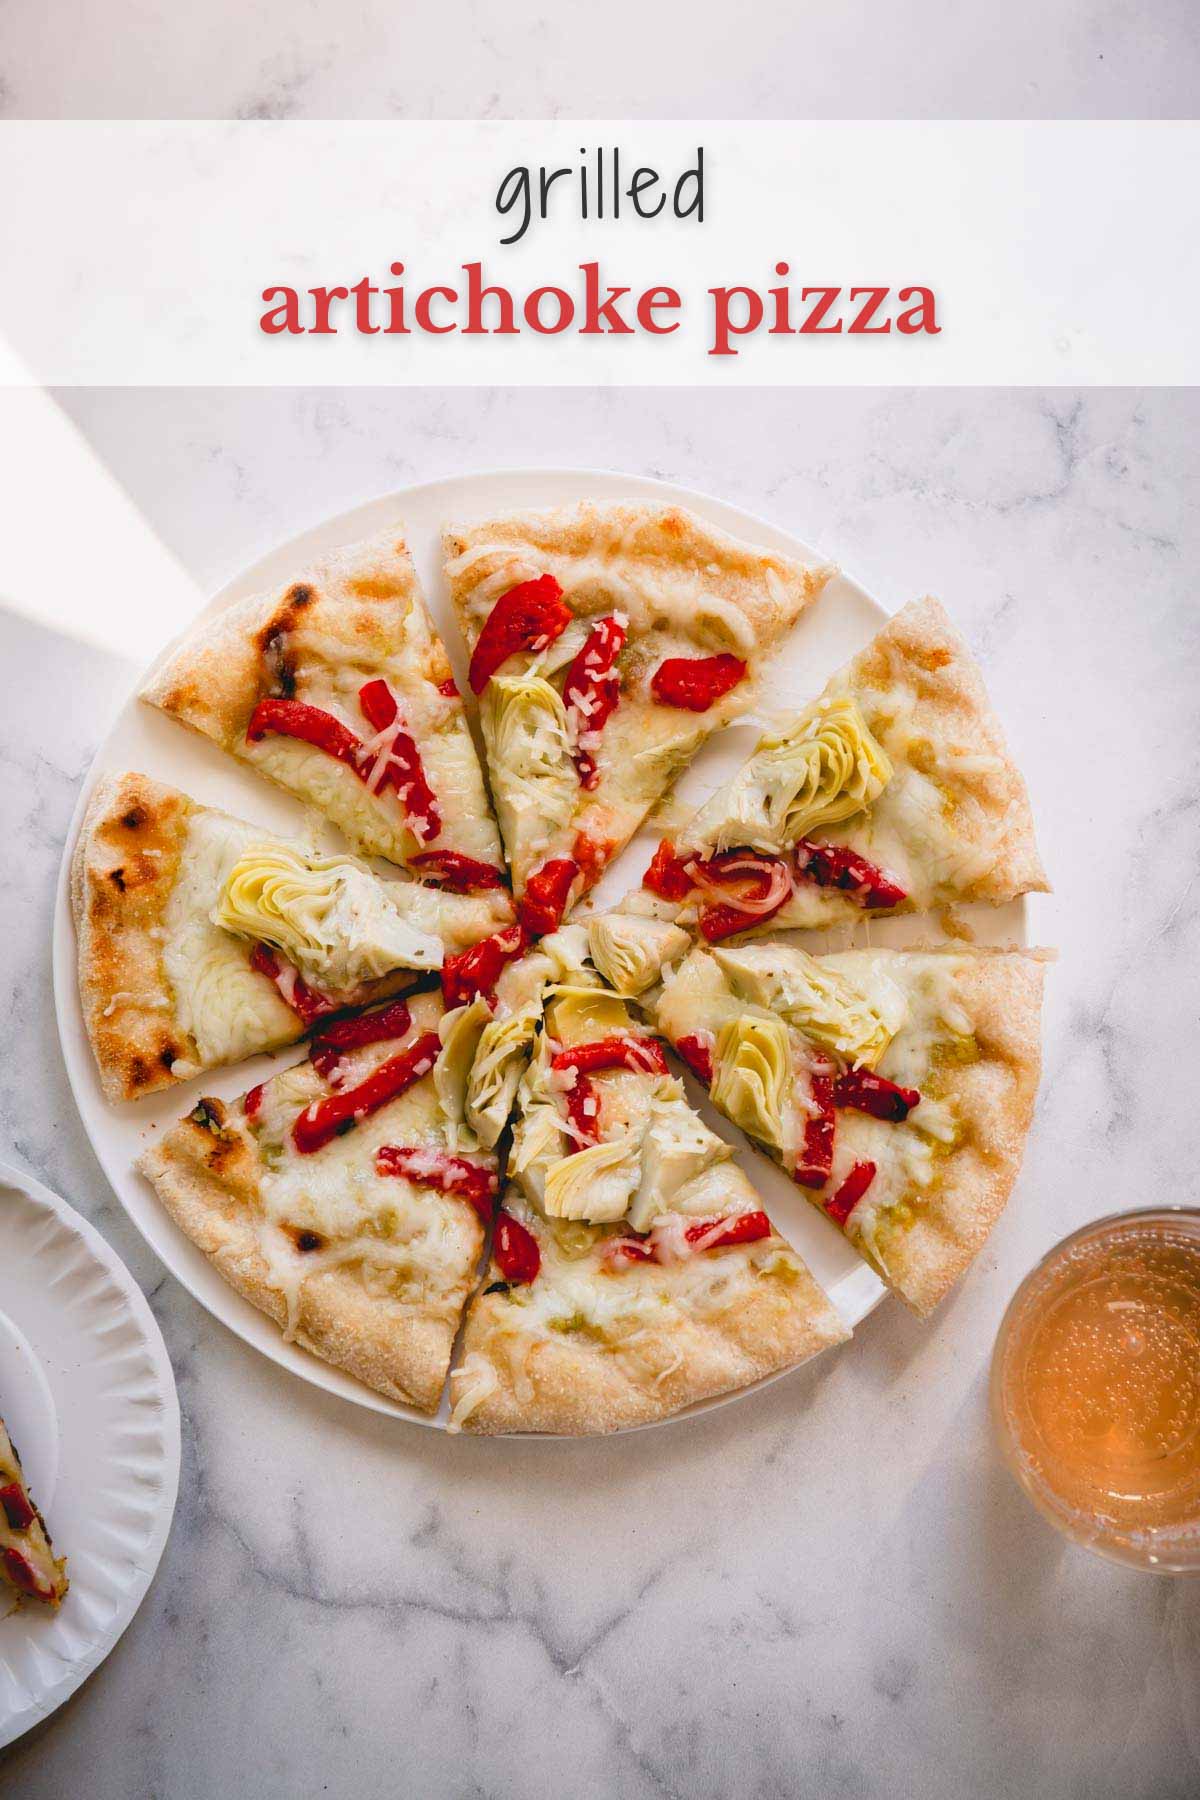 Sliced artichoke pizza on a white plate.